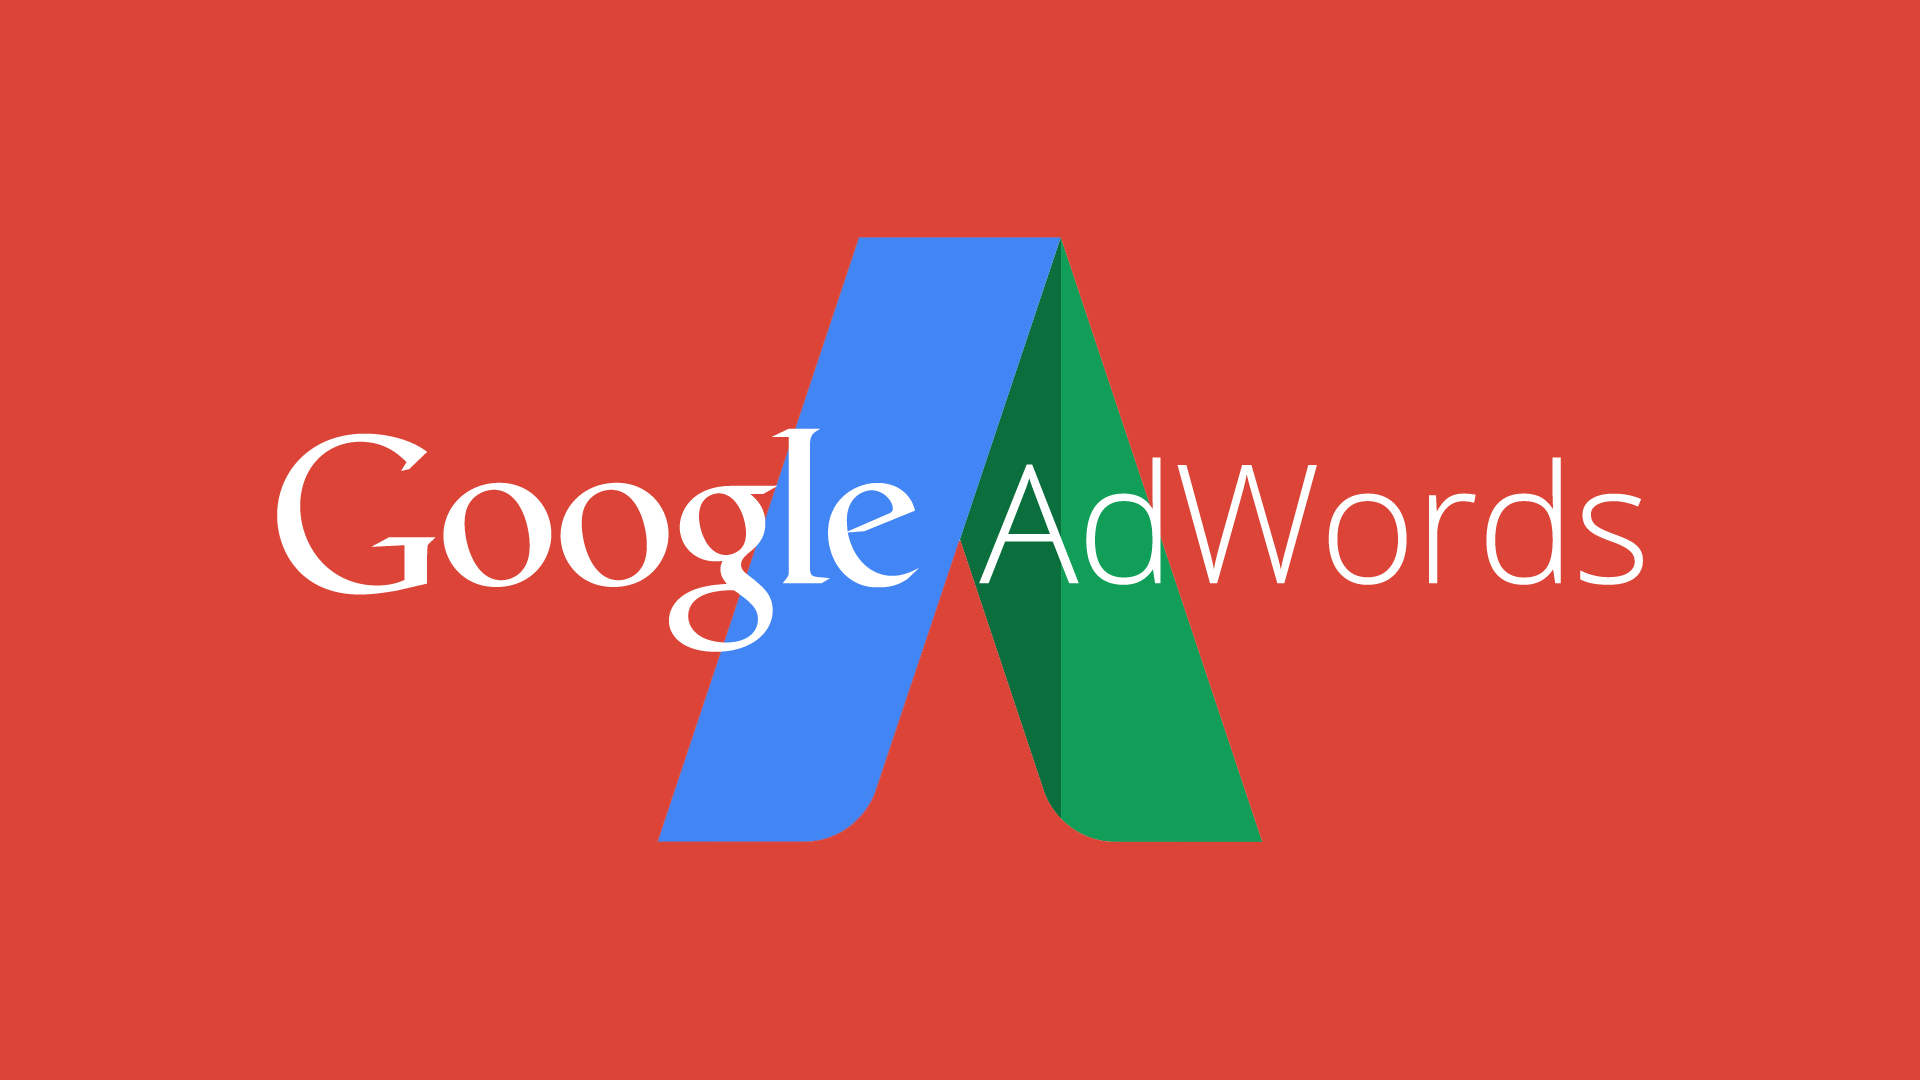 google-adwords-logo